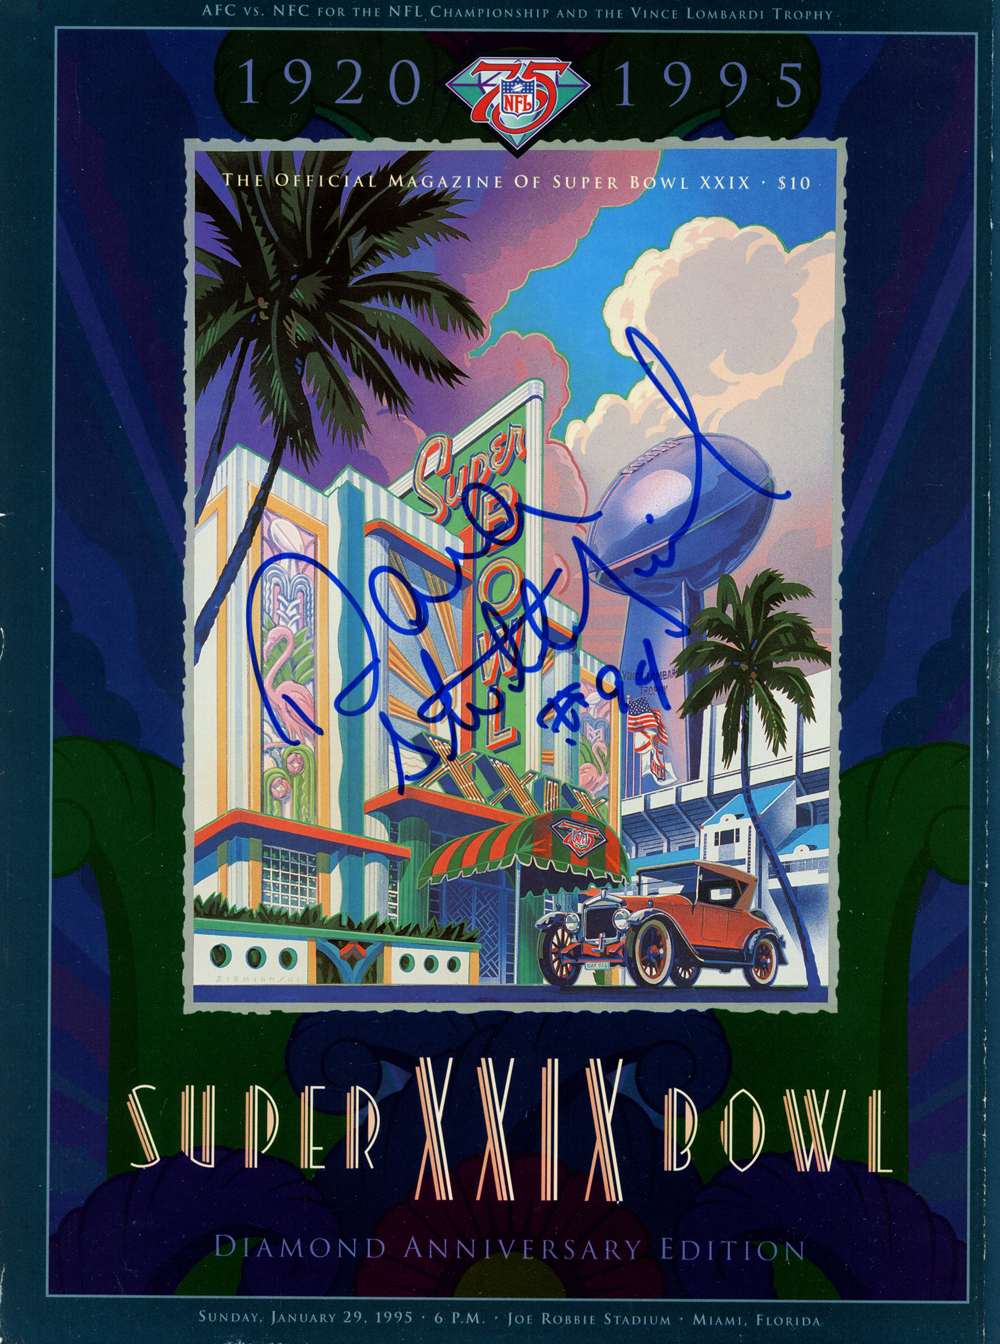 Dana Stubblefield Autographed/Signed Super Bowl XXIX Program Beckett 37404